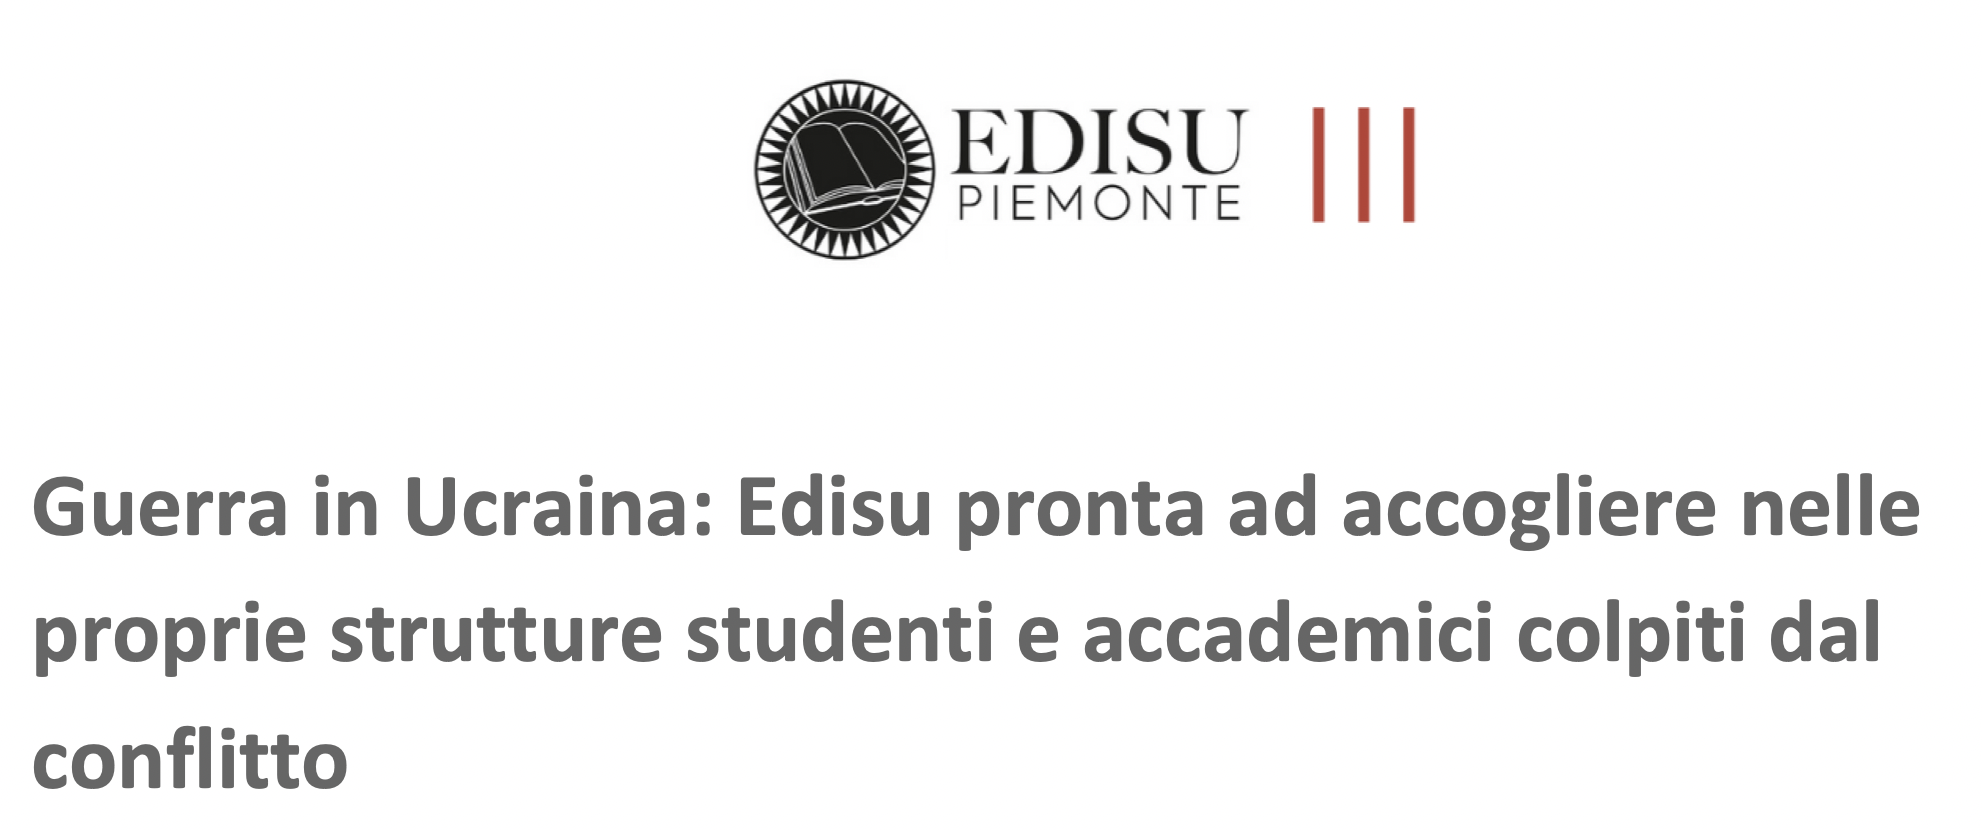 EDISU for Ucraina @ Sportello Studenti Torino EDISU Piemonte